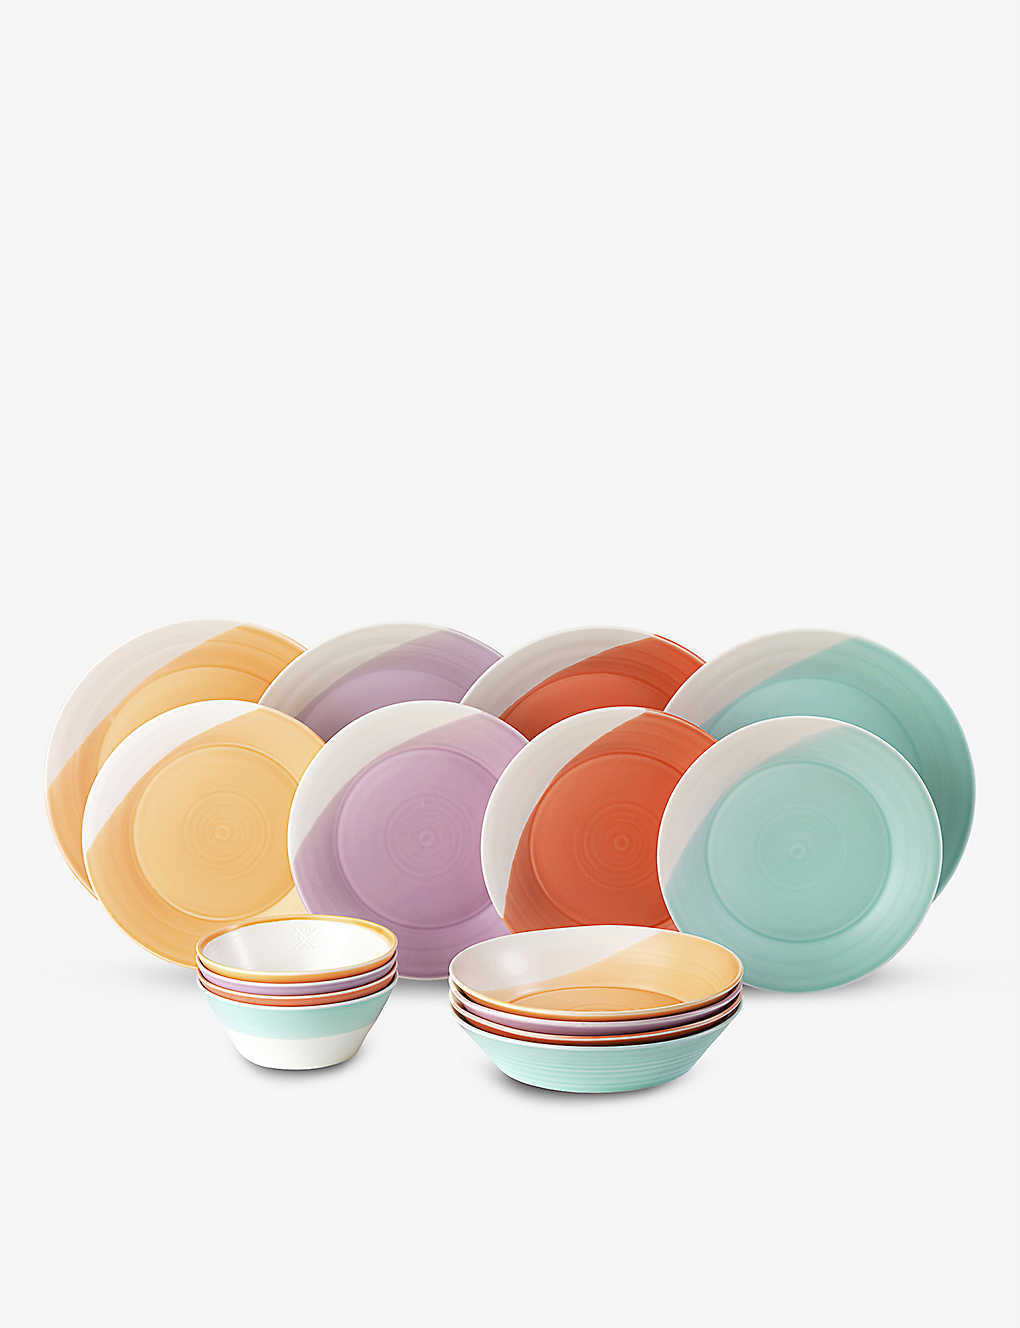 Royal Doulton 1815 Brights Porcelain Plates And Bowls Set Of Sixteen